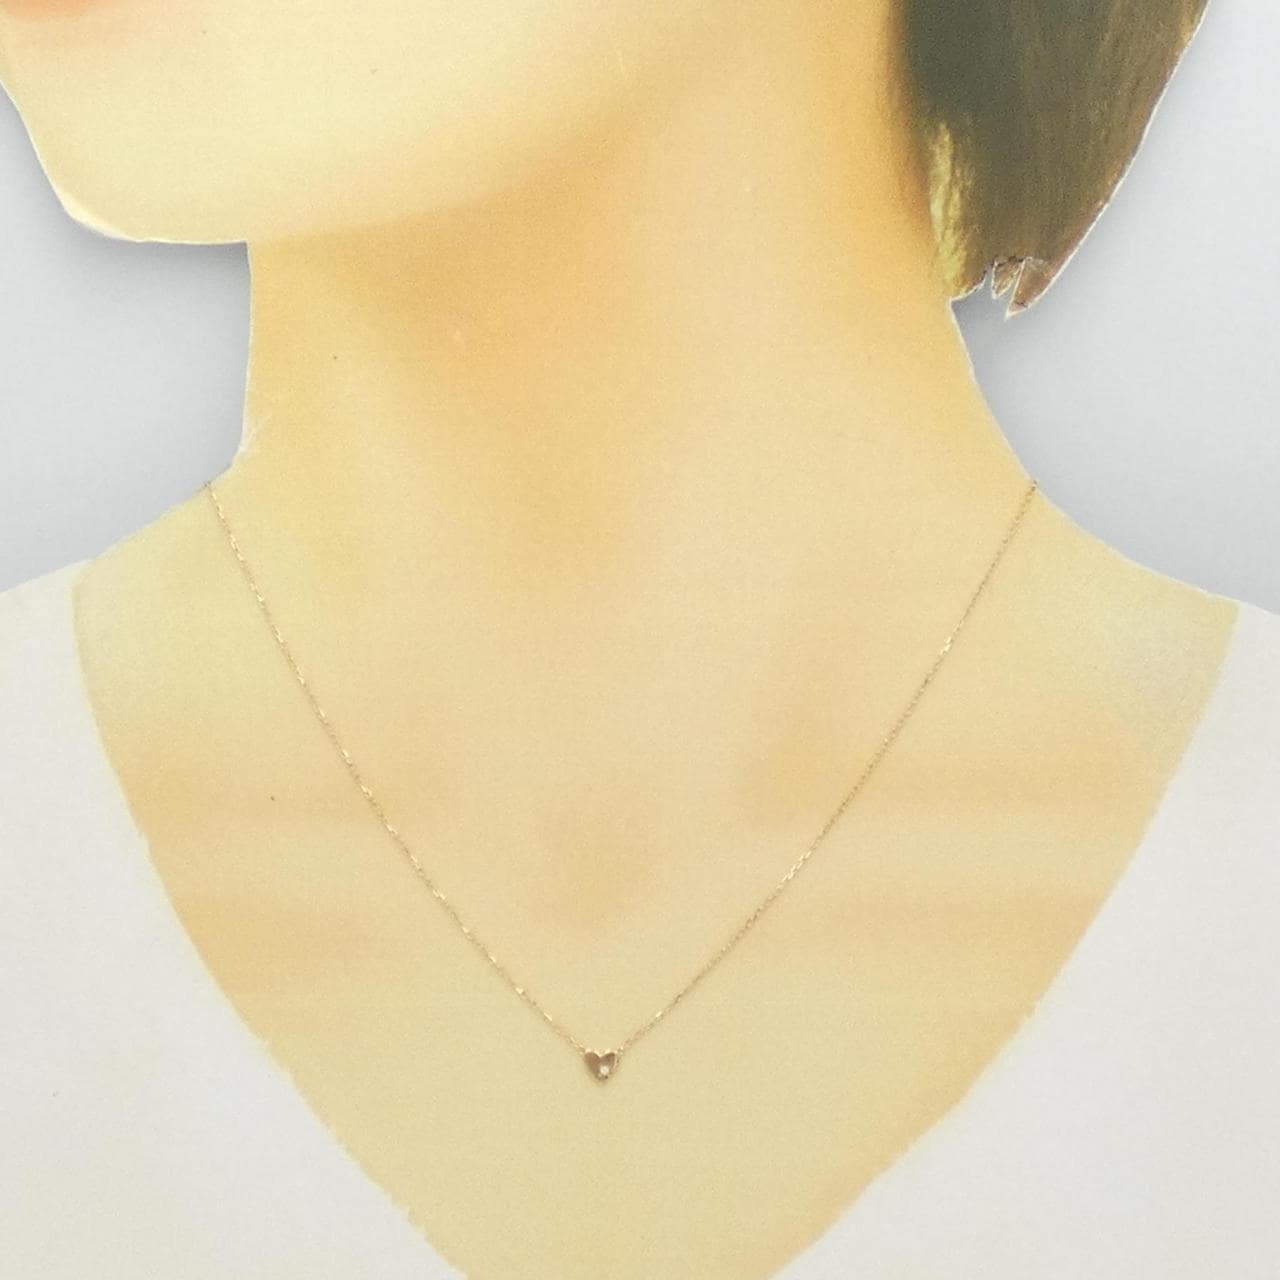 AHKAH Diamond necklace 0.005CT